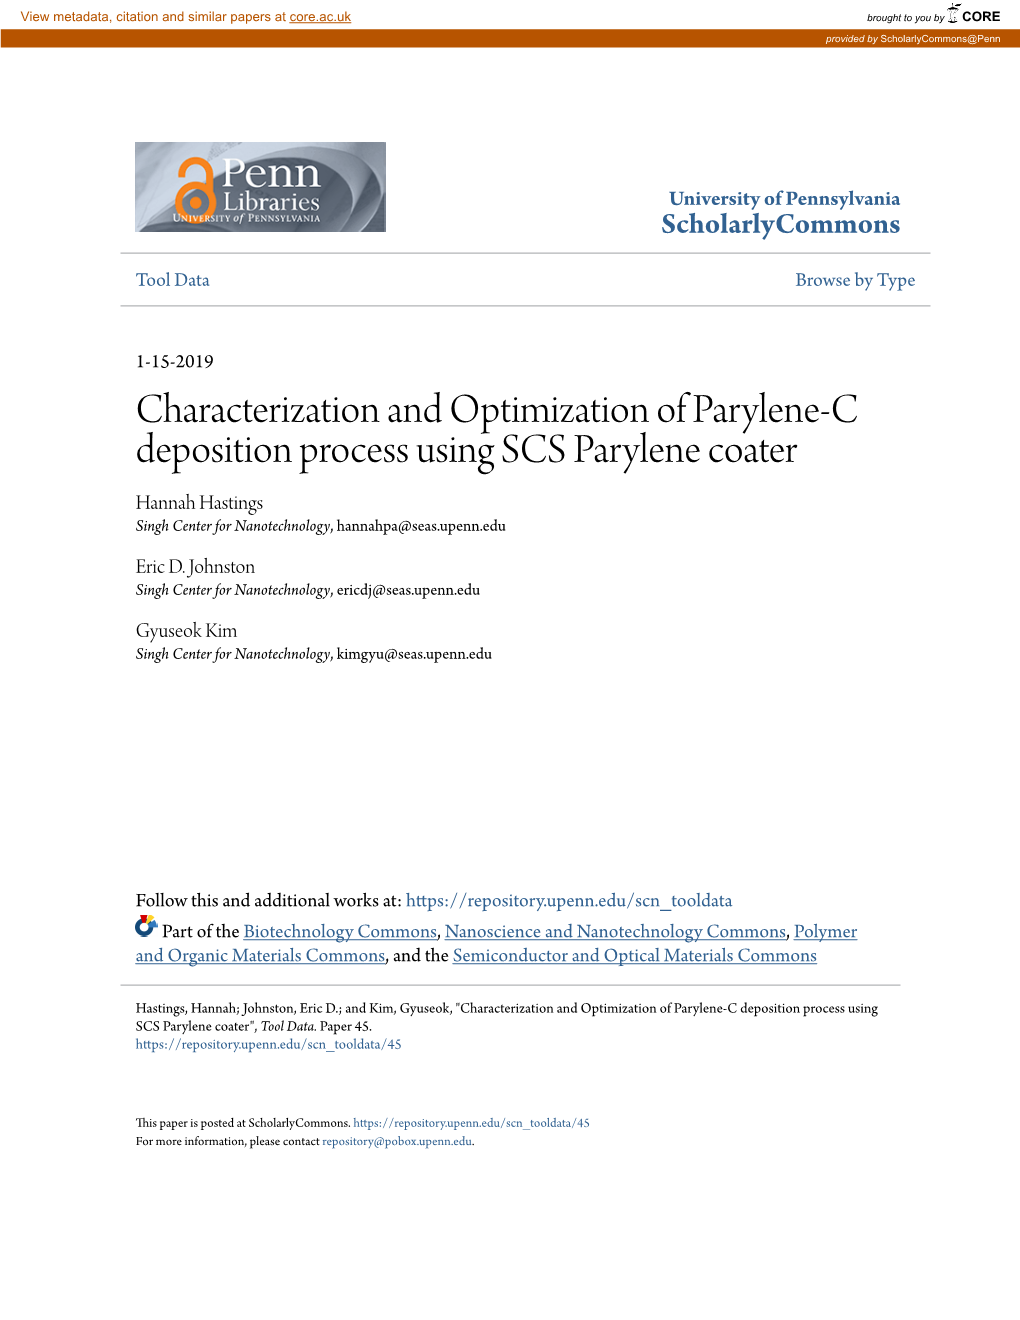 Characterization and Optimization of Parylene-C Deposition Process Using SCS Parylene Coater Hannah Hastings Singh Center for Nanotechnology, Hannahpa@Seas.Upenn.Edu